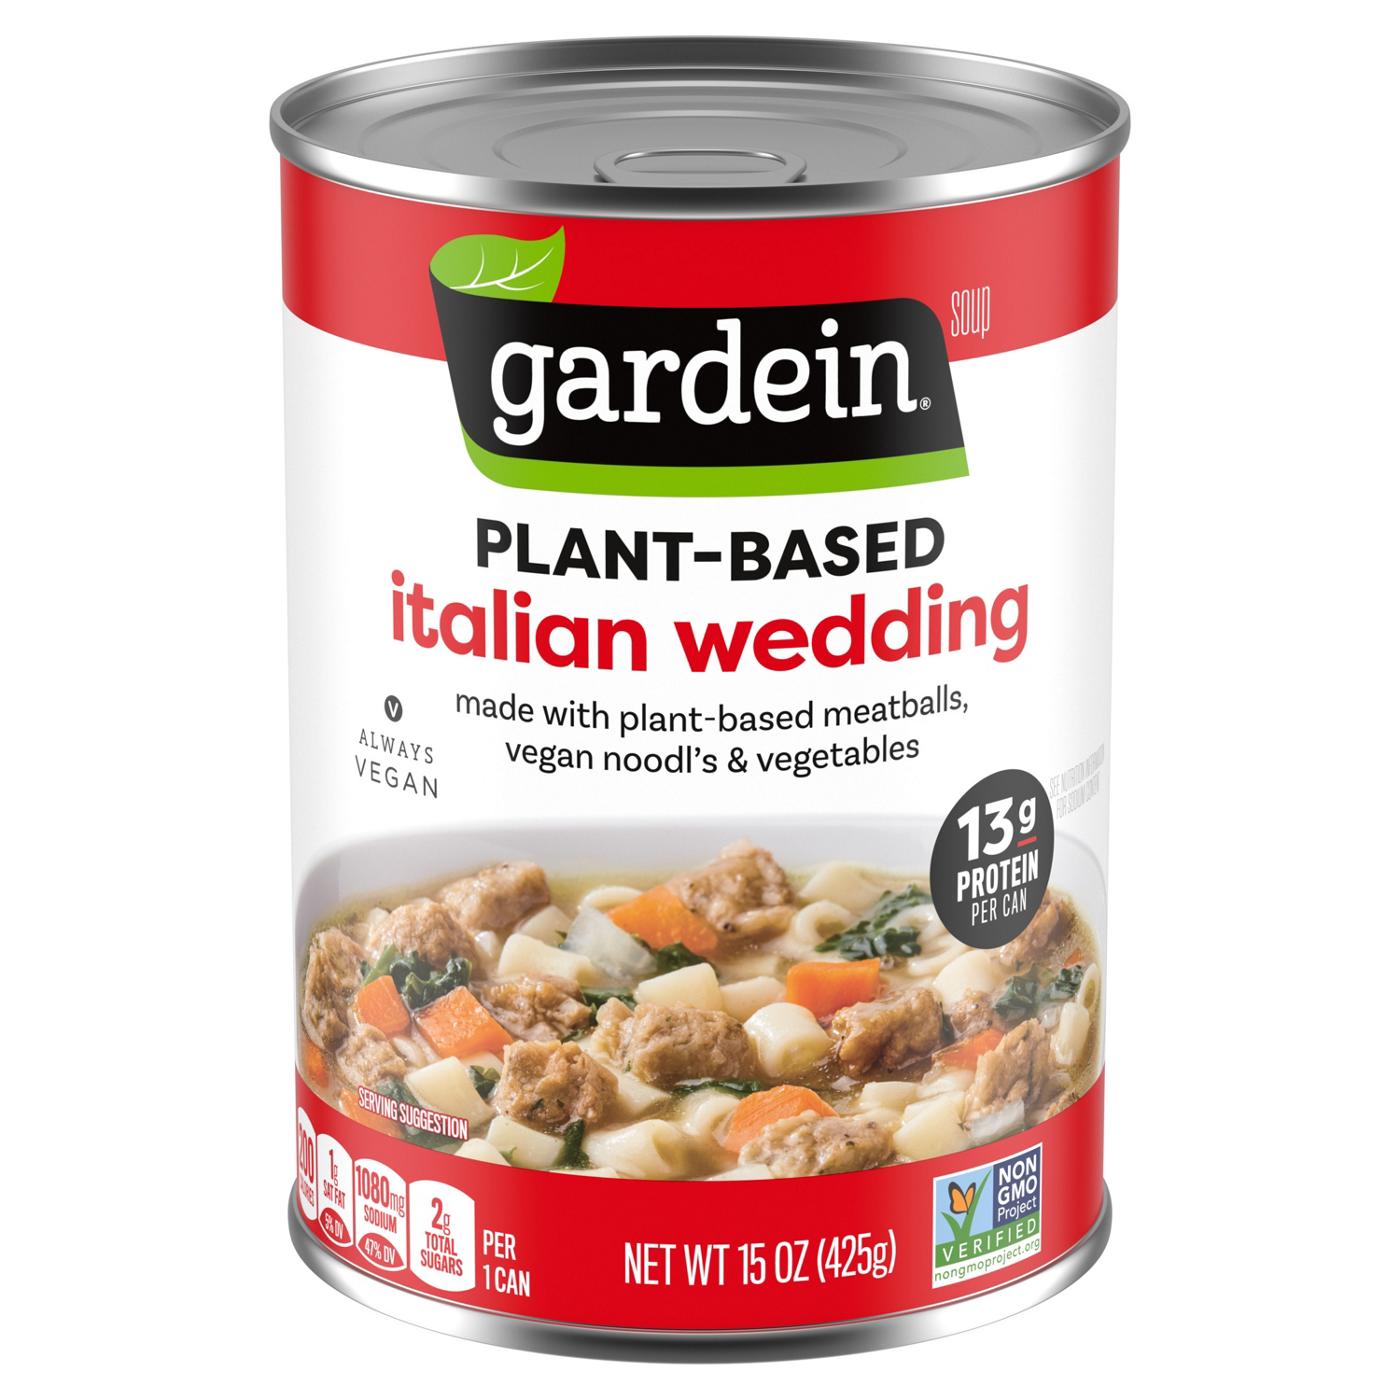 Gardein Vegan Plant-Based Meatball Italian Wedding Soup; image 1 of 6